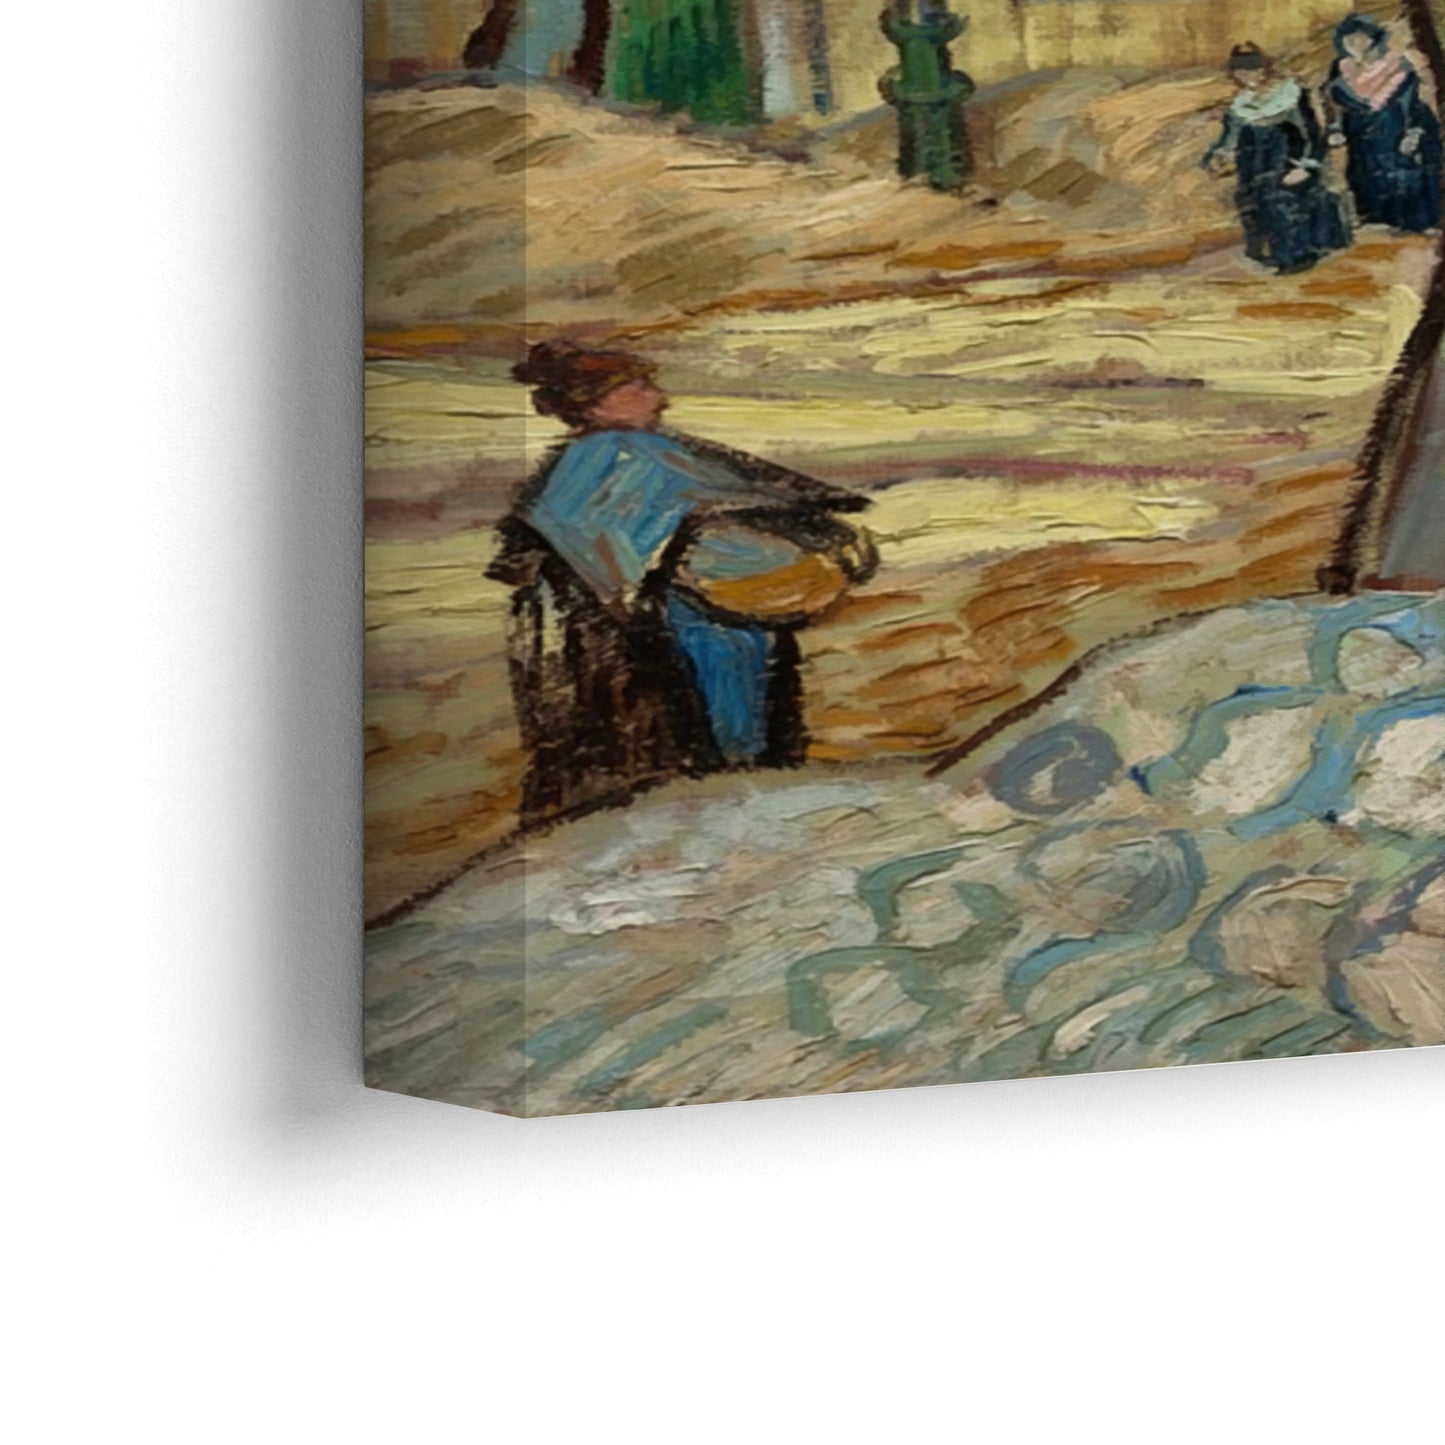 Wielkie platany, Vincent Van Gogh